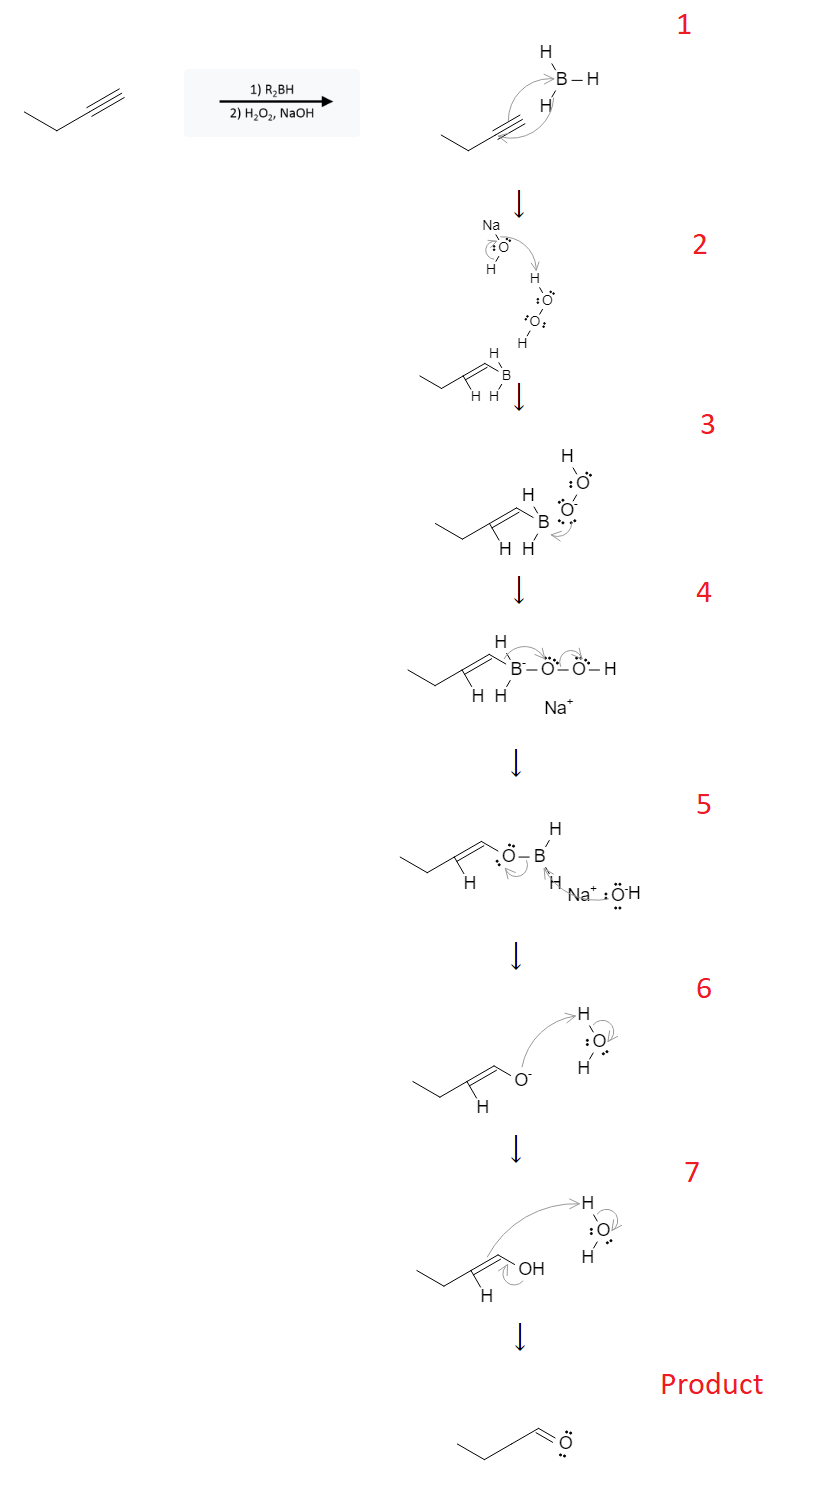 Alkyne Reactions: Alkyne Hydroboration using BH3, NaOH, H2O2 - image3